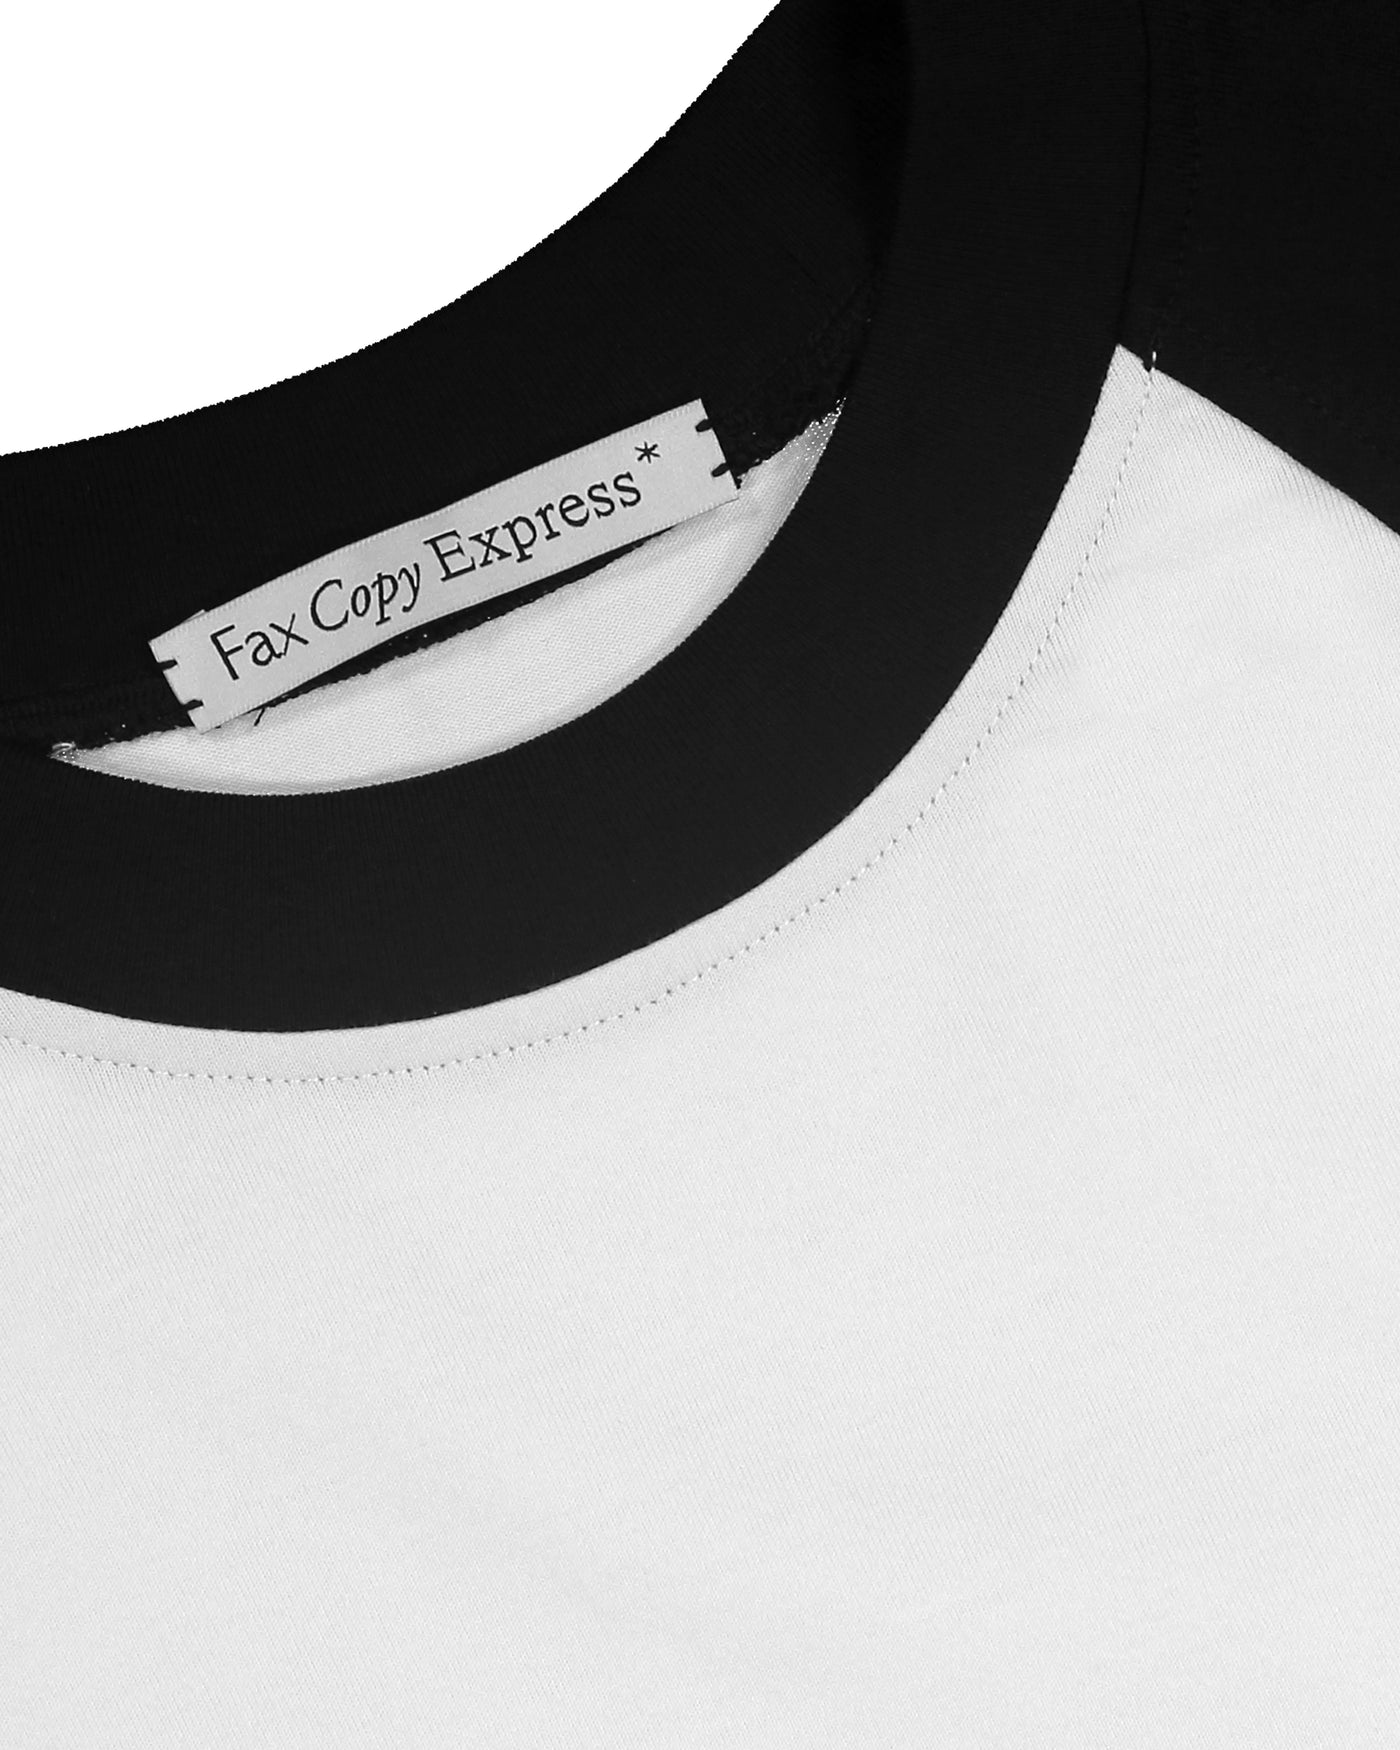 Long-sleeved Raglan Shirt – Fax Copy Express*